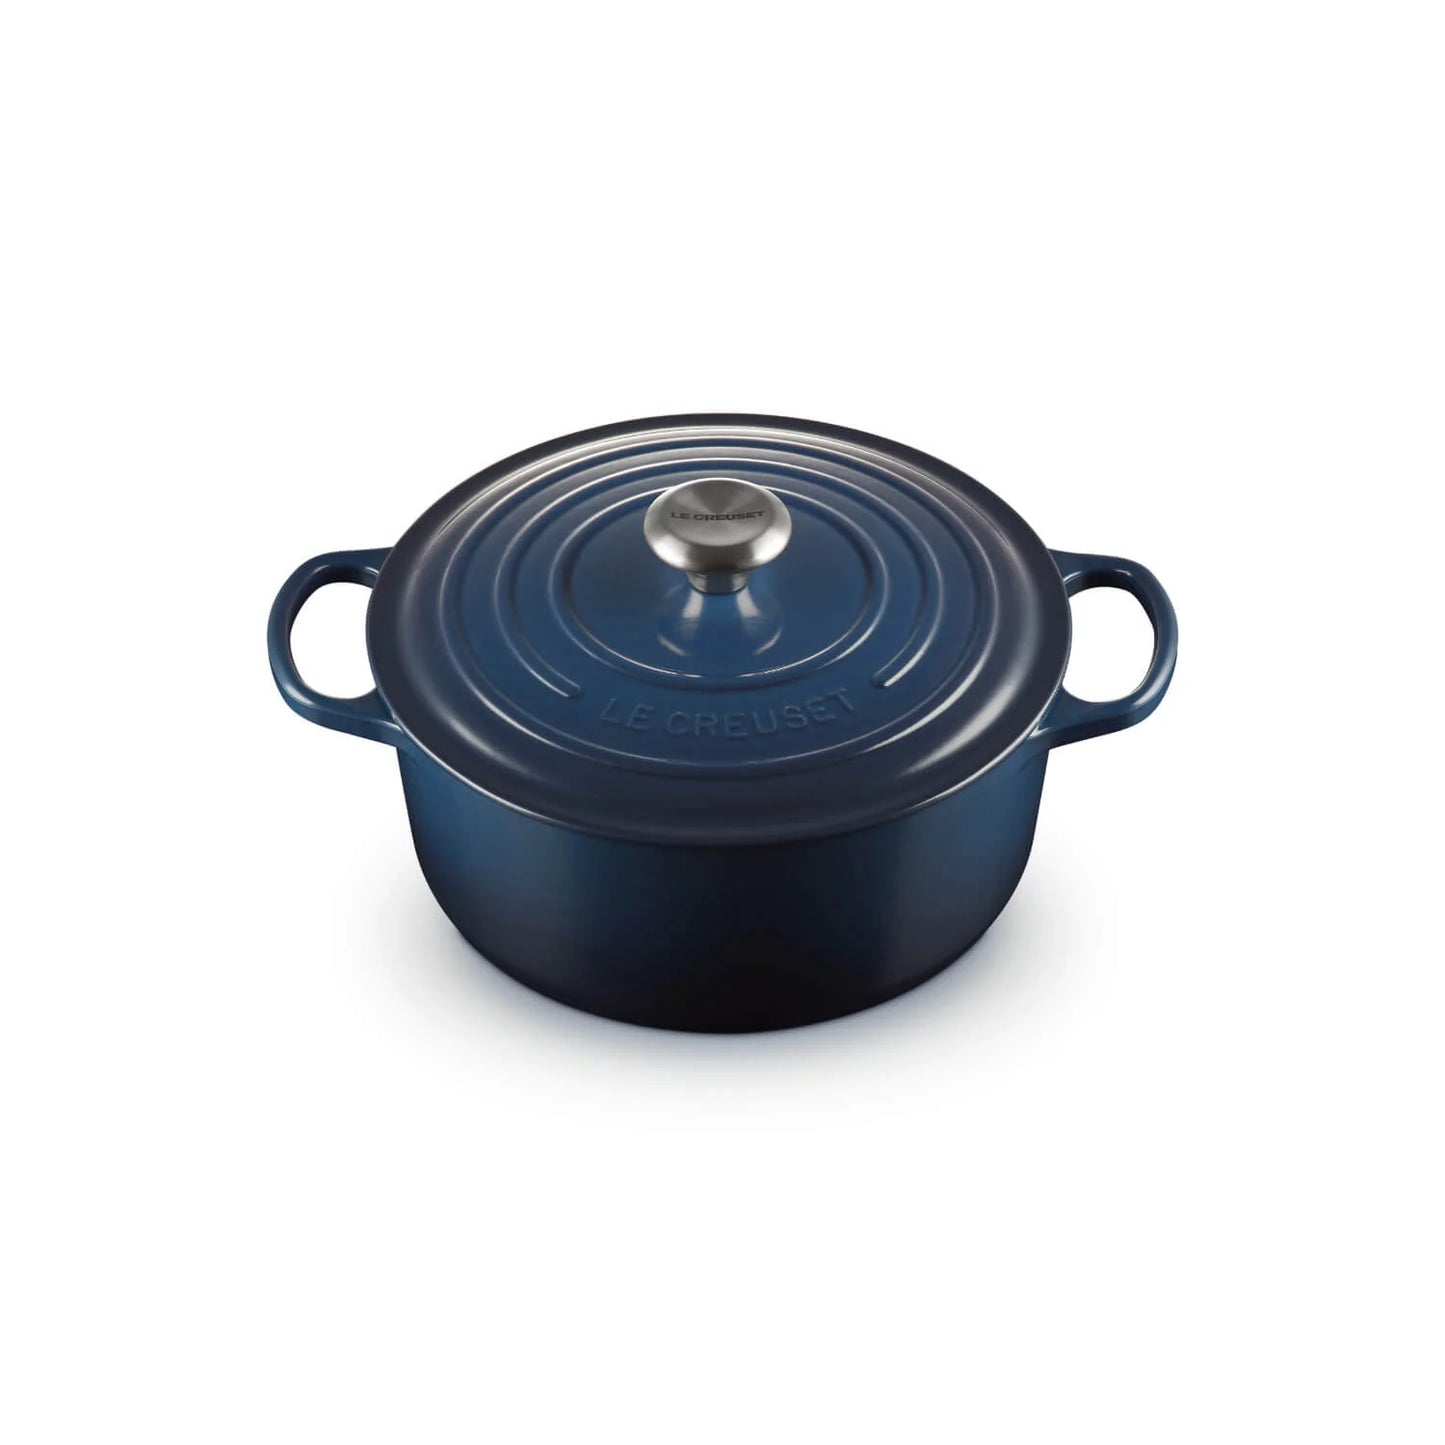 le creuset cast iron round casserole in ink (dark blue)  22cm